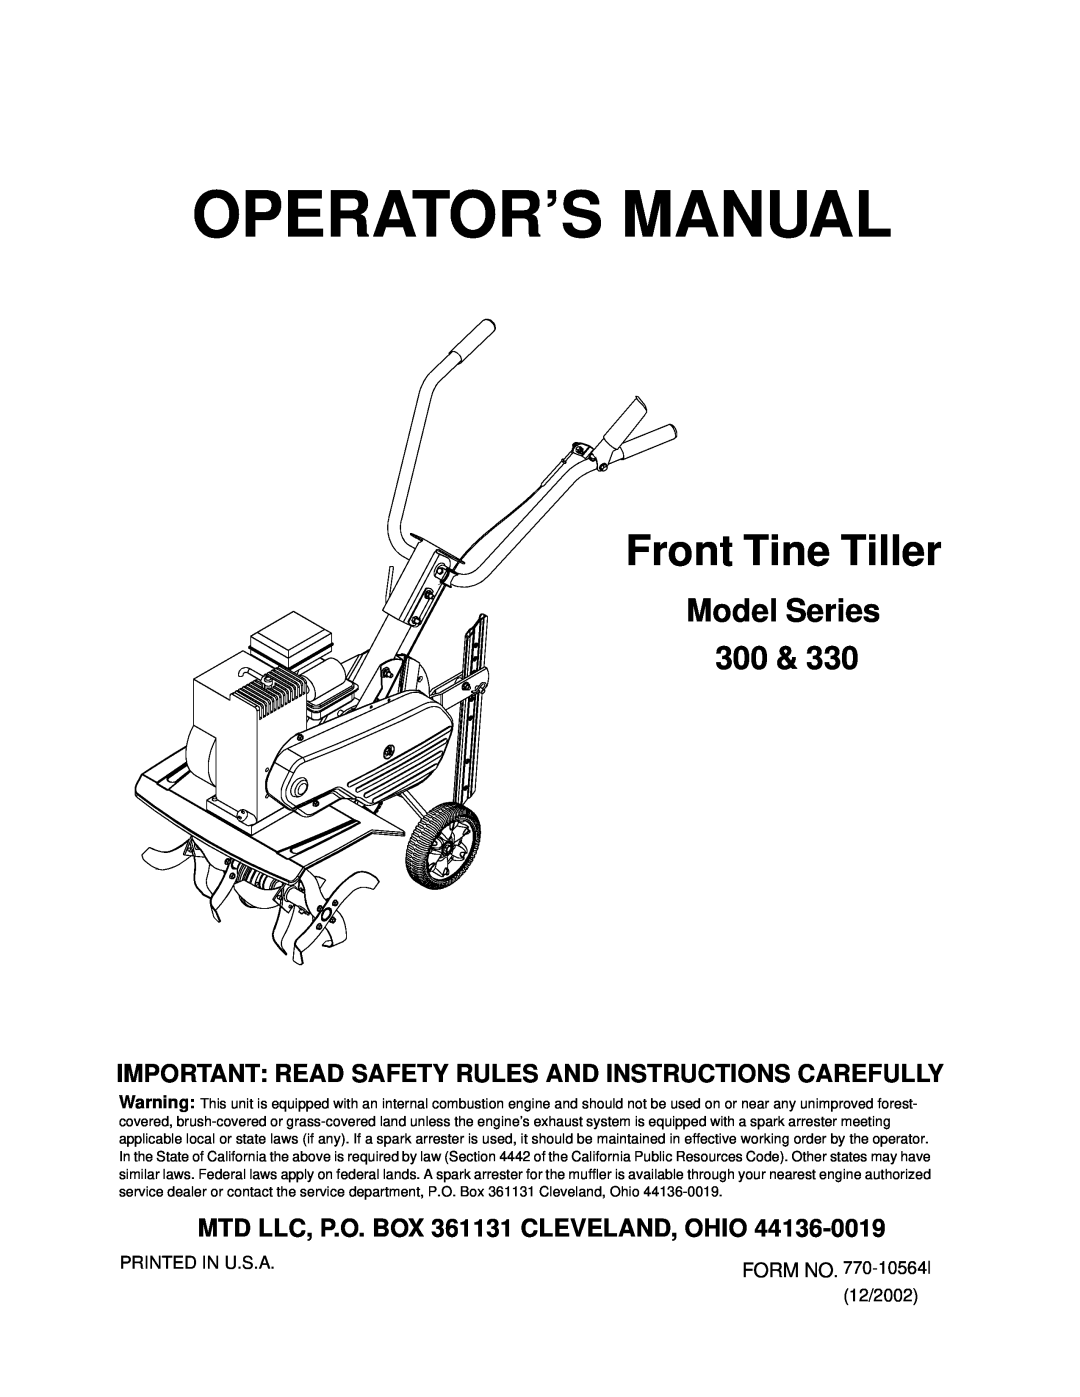 Bolens 300E, 350E manual Operator’S Manual, Front Tine Tiller, Model Series 300, MTD LLC, P.O. BOX 361131 CLEVELAND, OHIO 